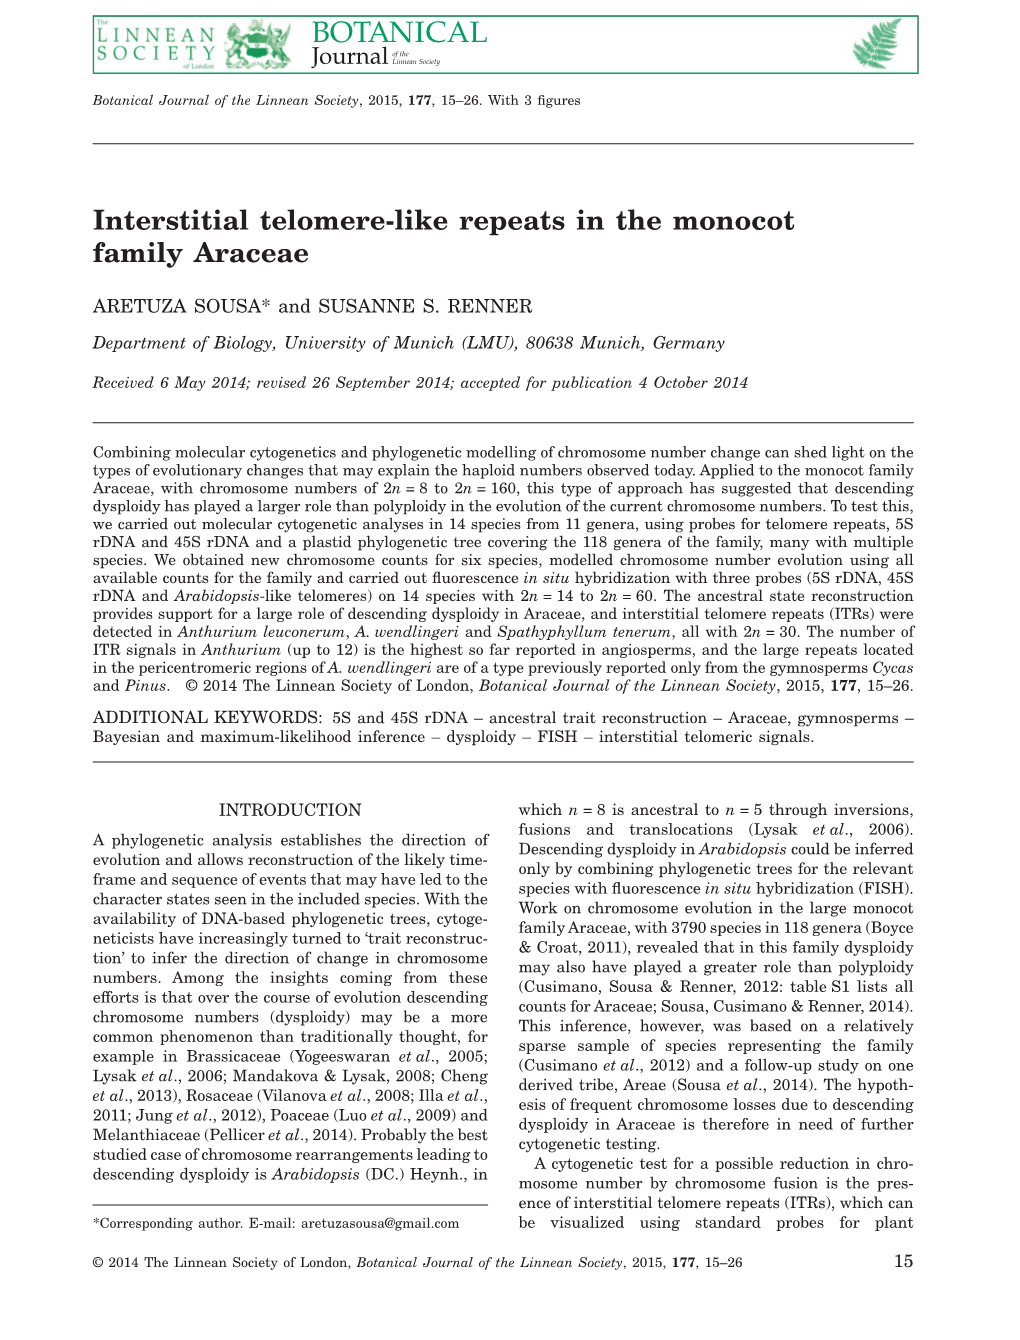 Interstitial Telomerelike Repeats in the Monocot Family Araceae